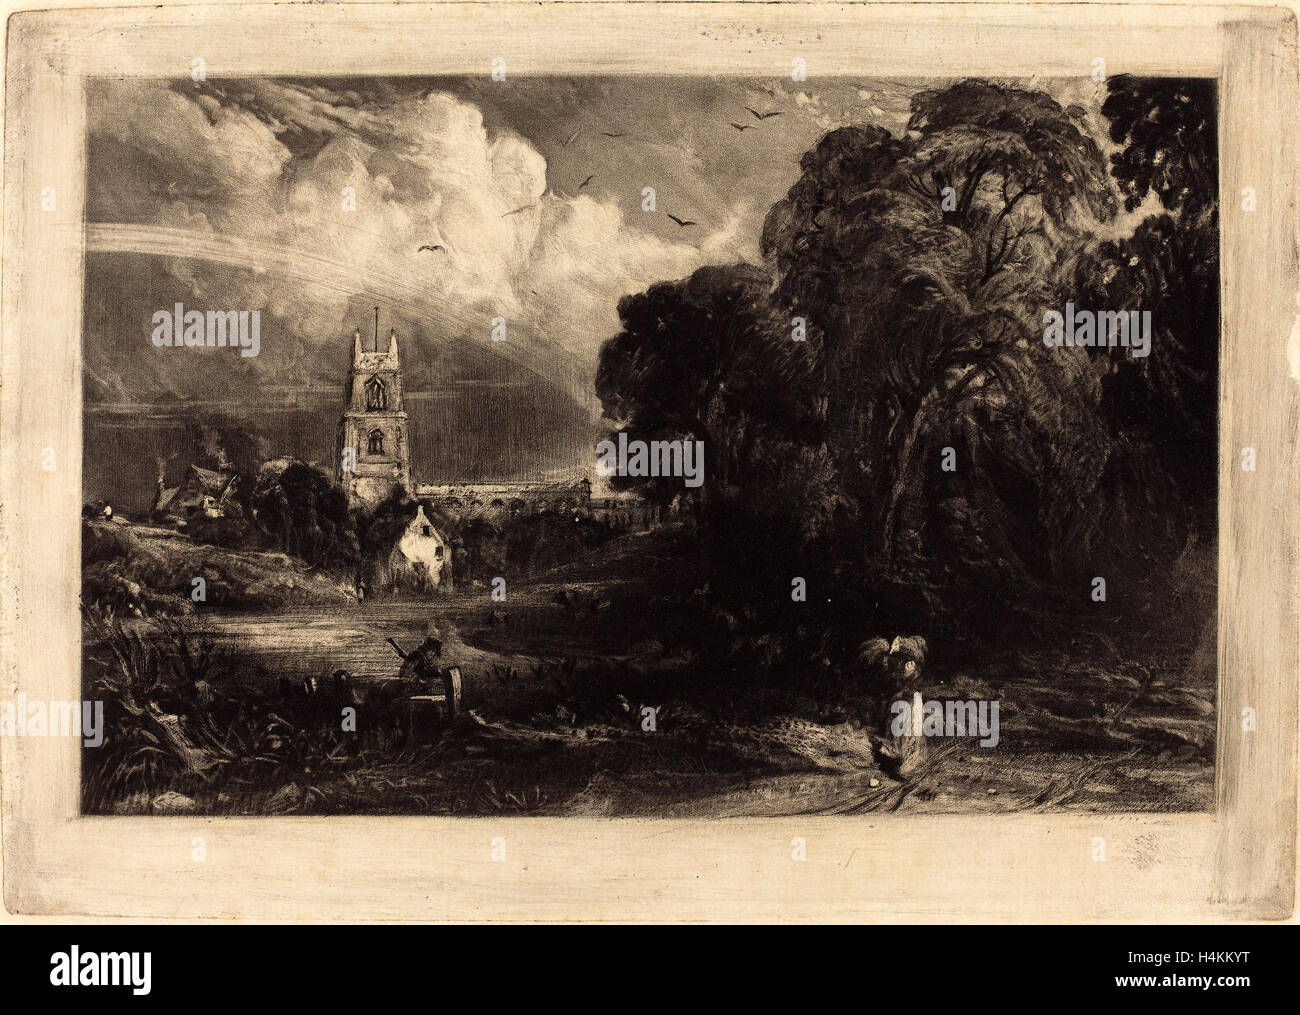 David Lucas dopo John Constable (British, 1802 - 1881), Stoke-da-Neyland, 1830, mezzatinta su carta vergata [prova] Foto Stock